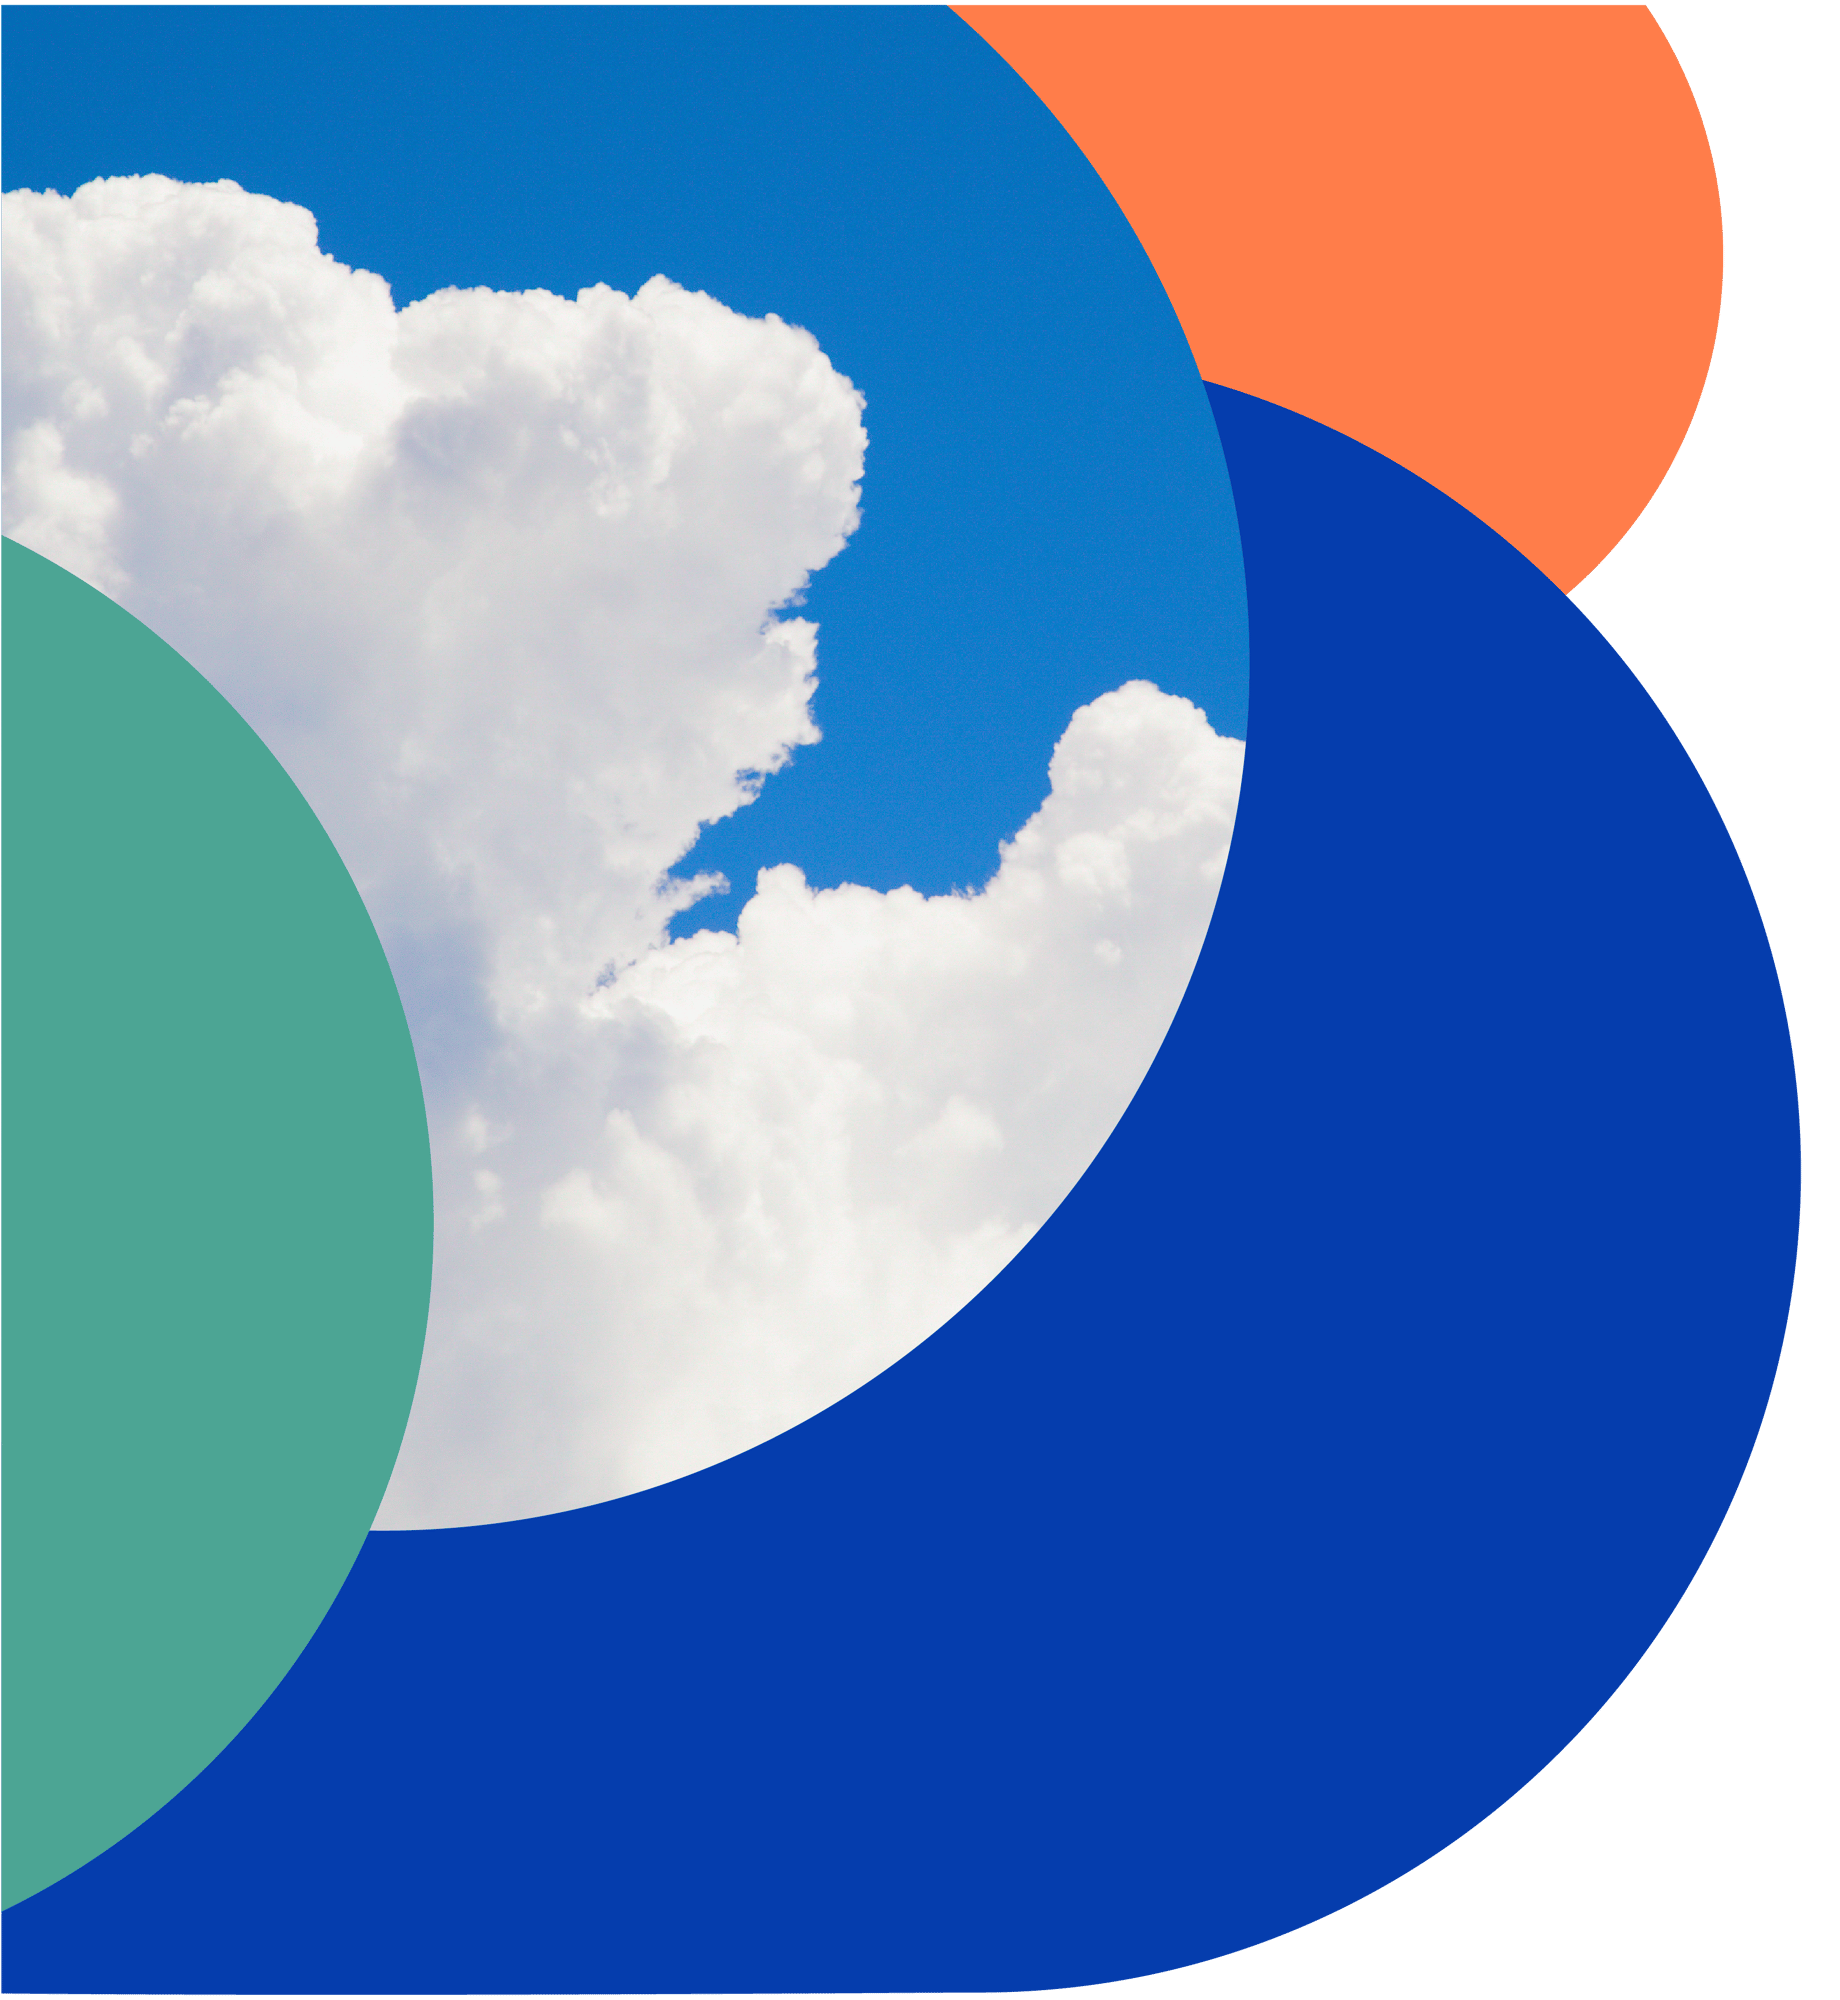 TEAM Cloud_Web Cloud icon_1.2